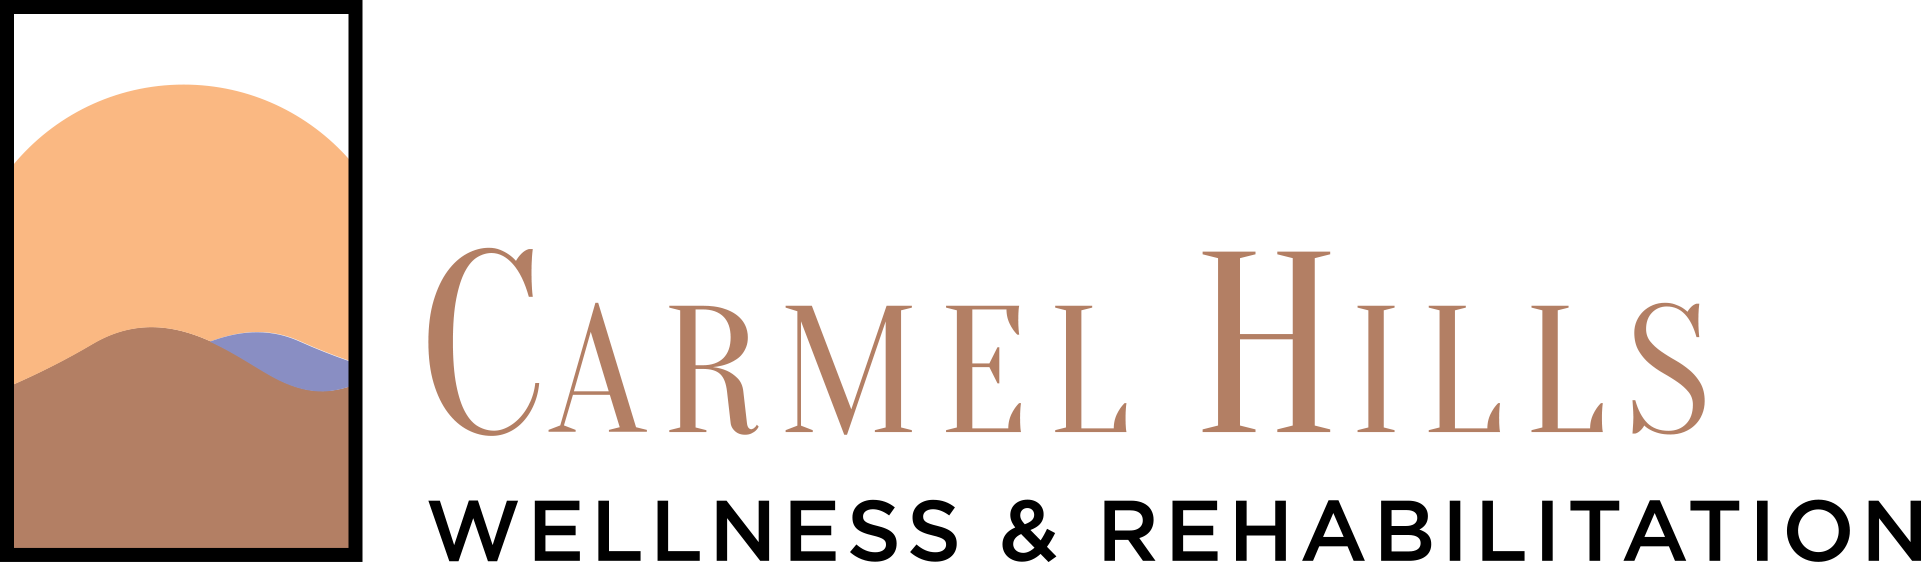 Carmel Hills Wellness and Rehabilitation